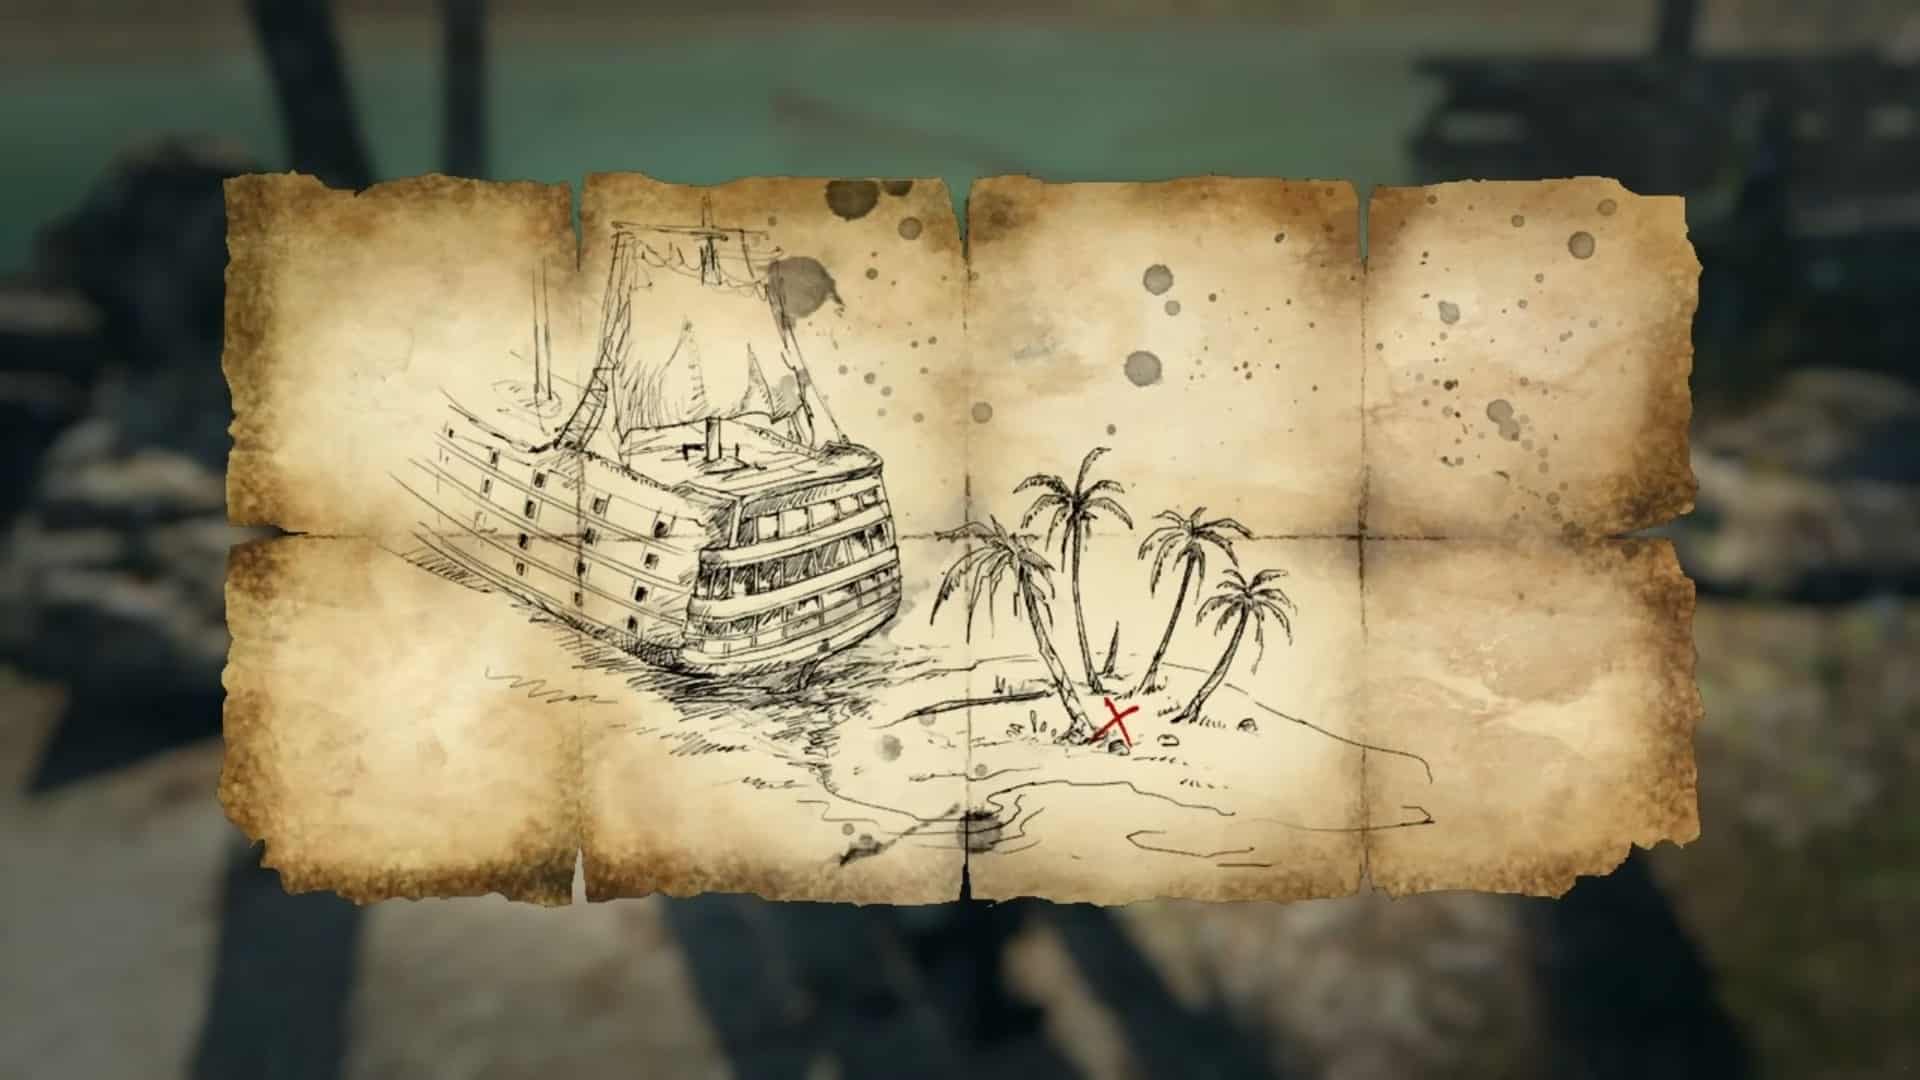 assassin's creed black flag treasure maps